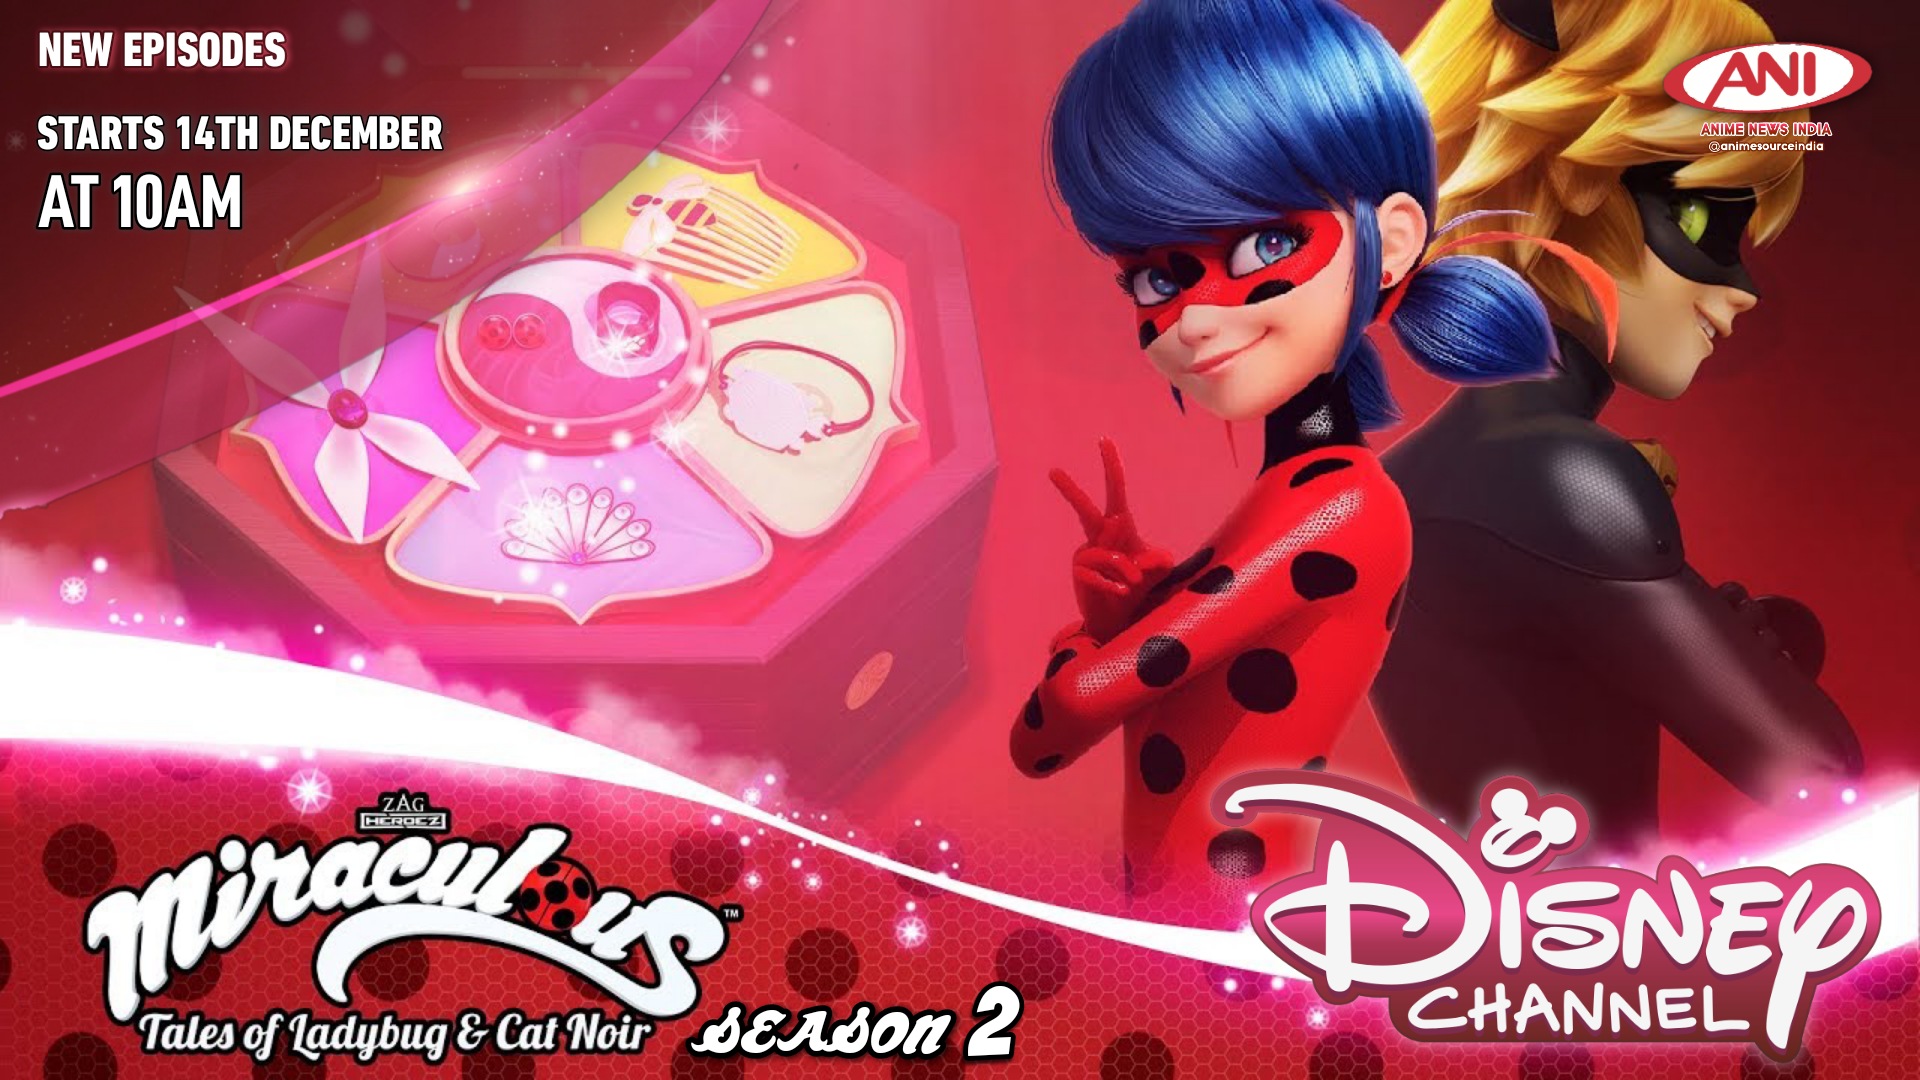 Disney india to Premiere Miraculous Ladybug Season 2 in December